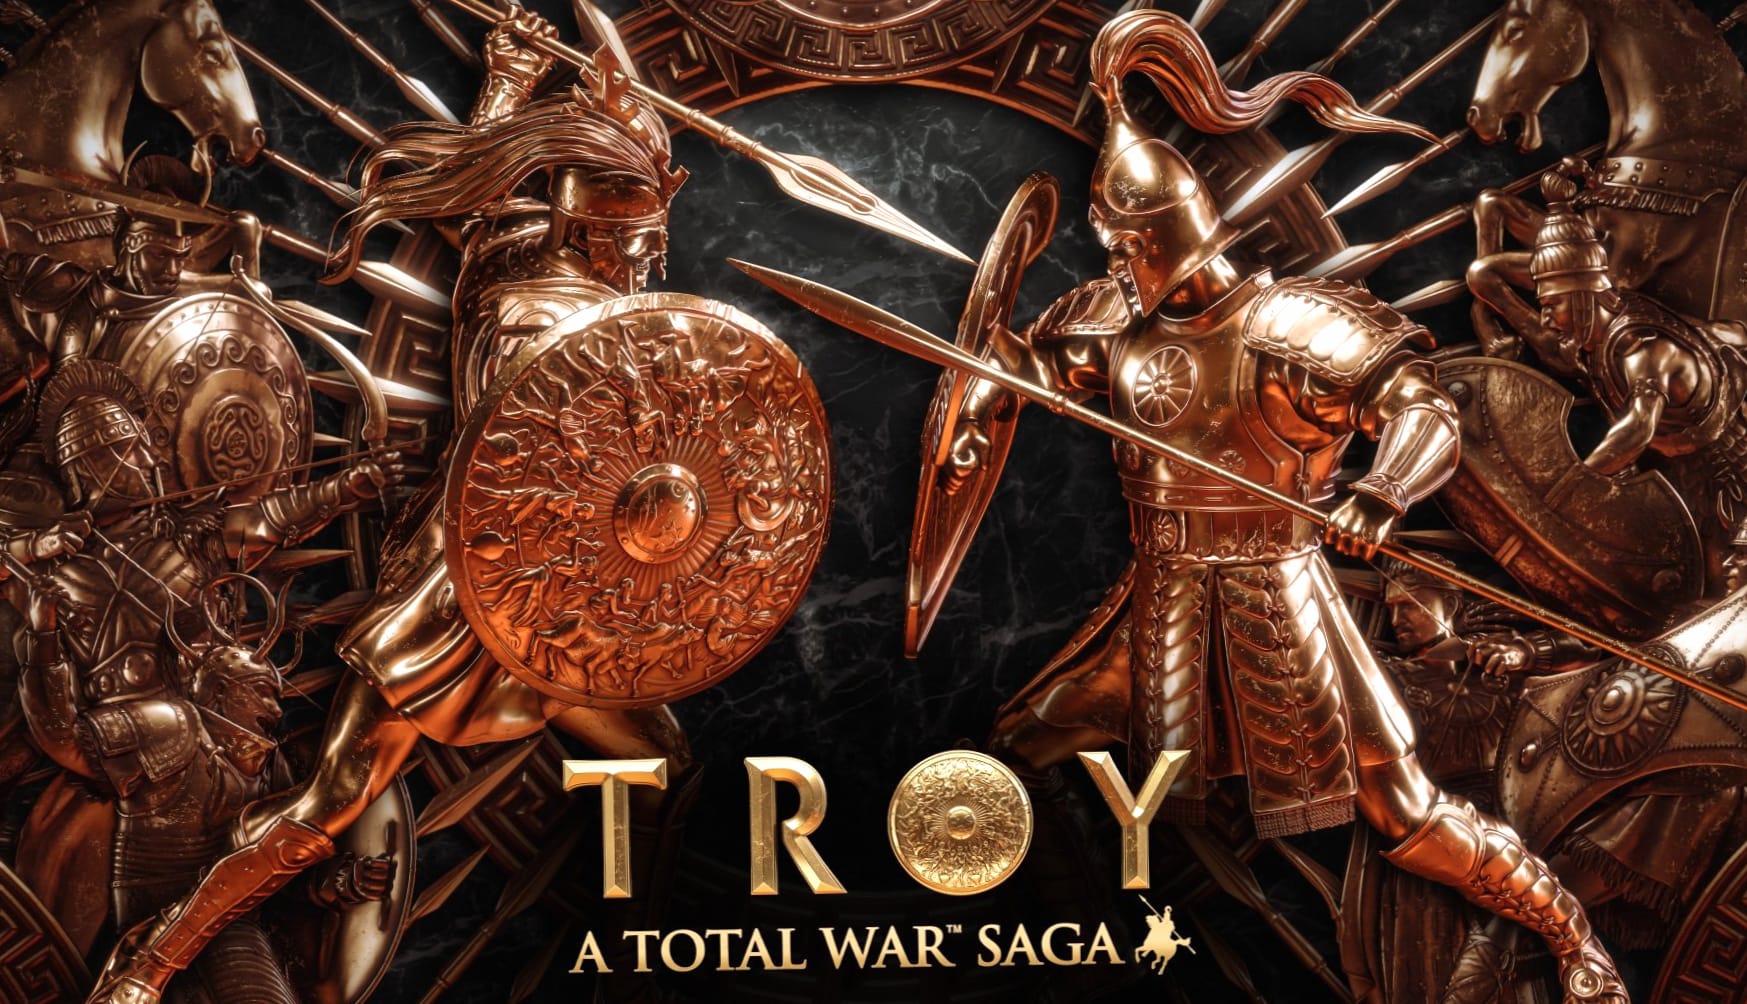 A Total War Saga TROY at 1024 x 1024 iPad size wallpapers HD quality